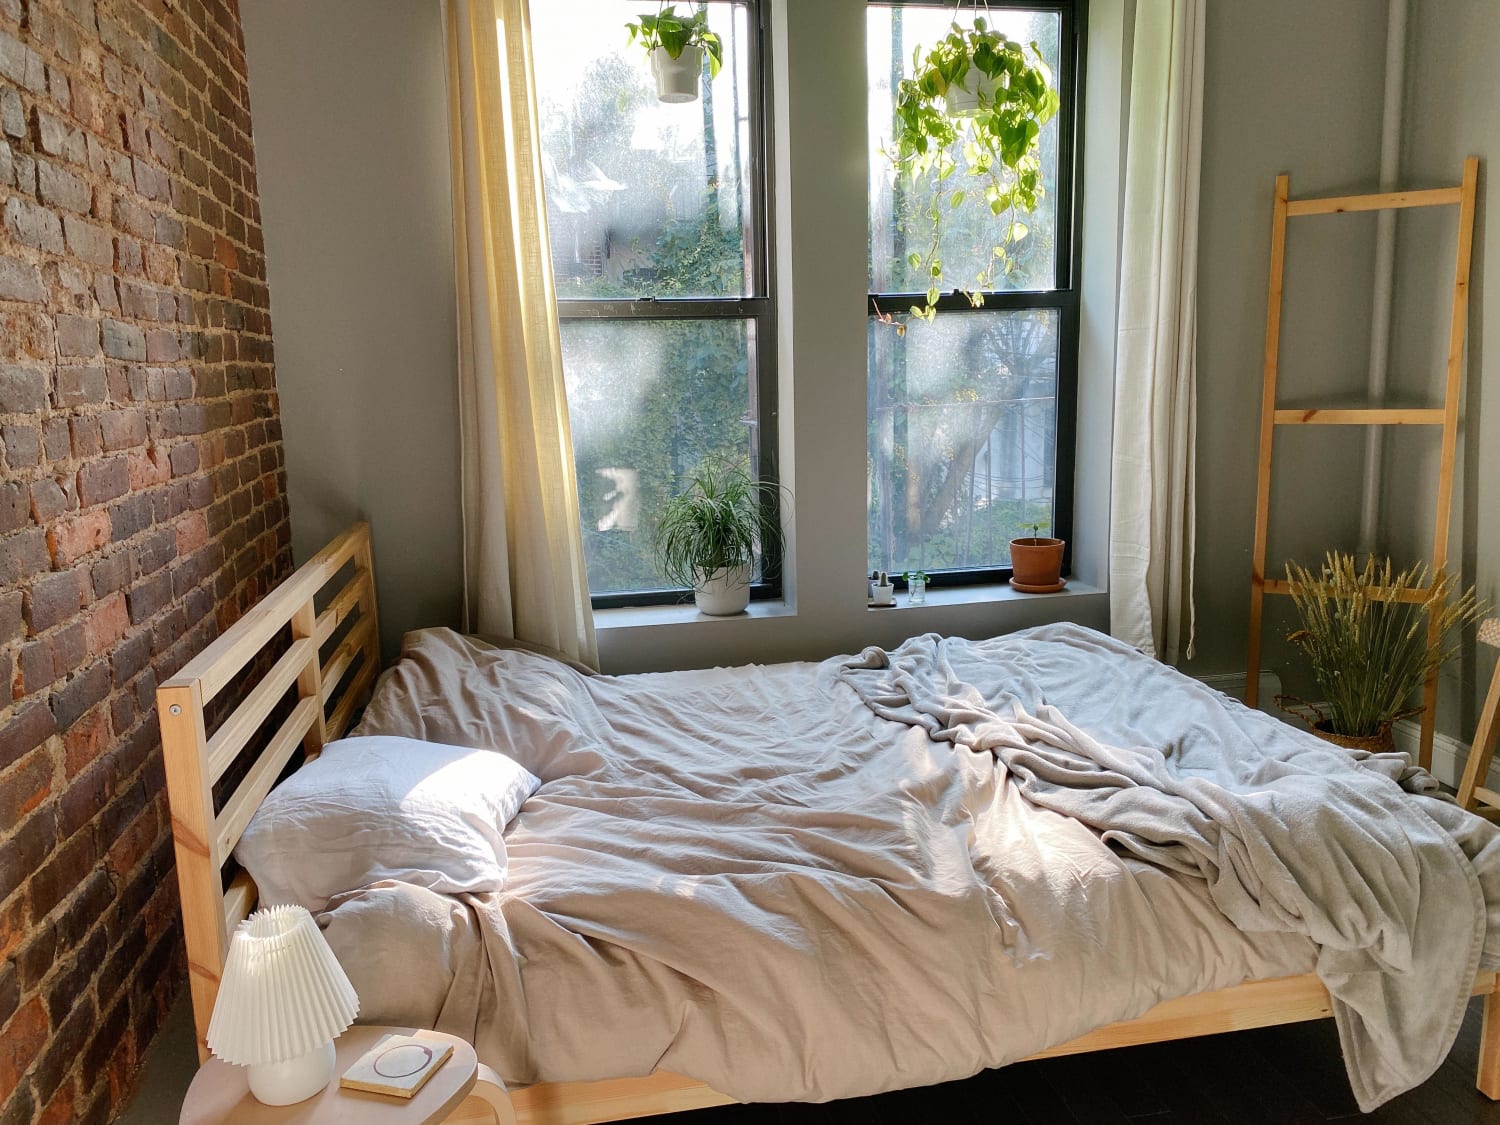 My cozy lil bedroom in Brooklyn~